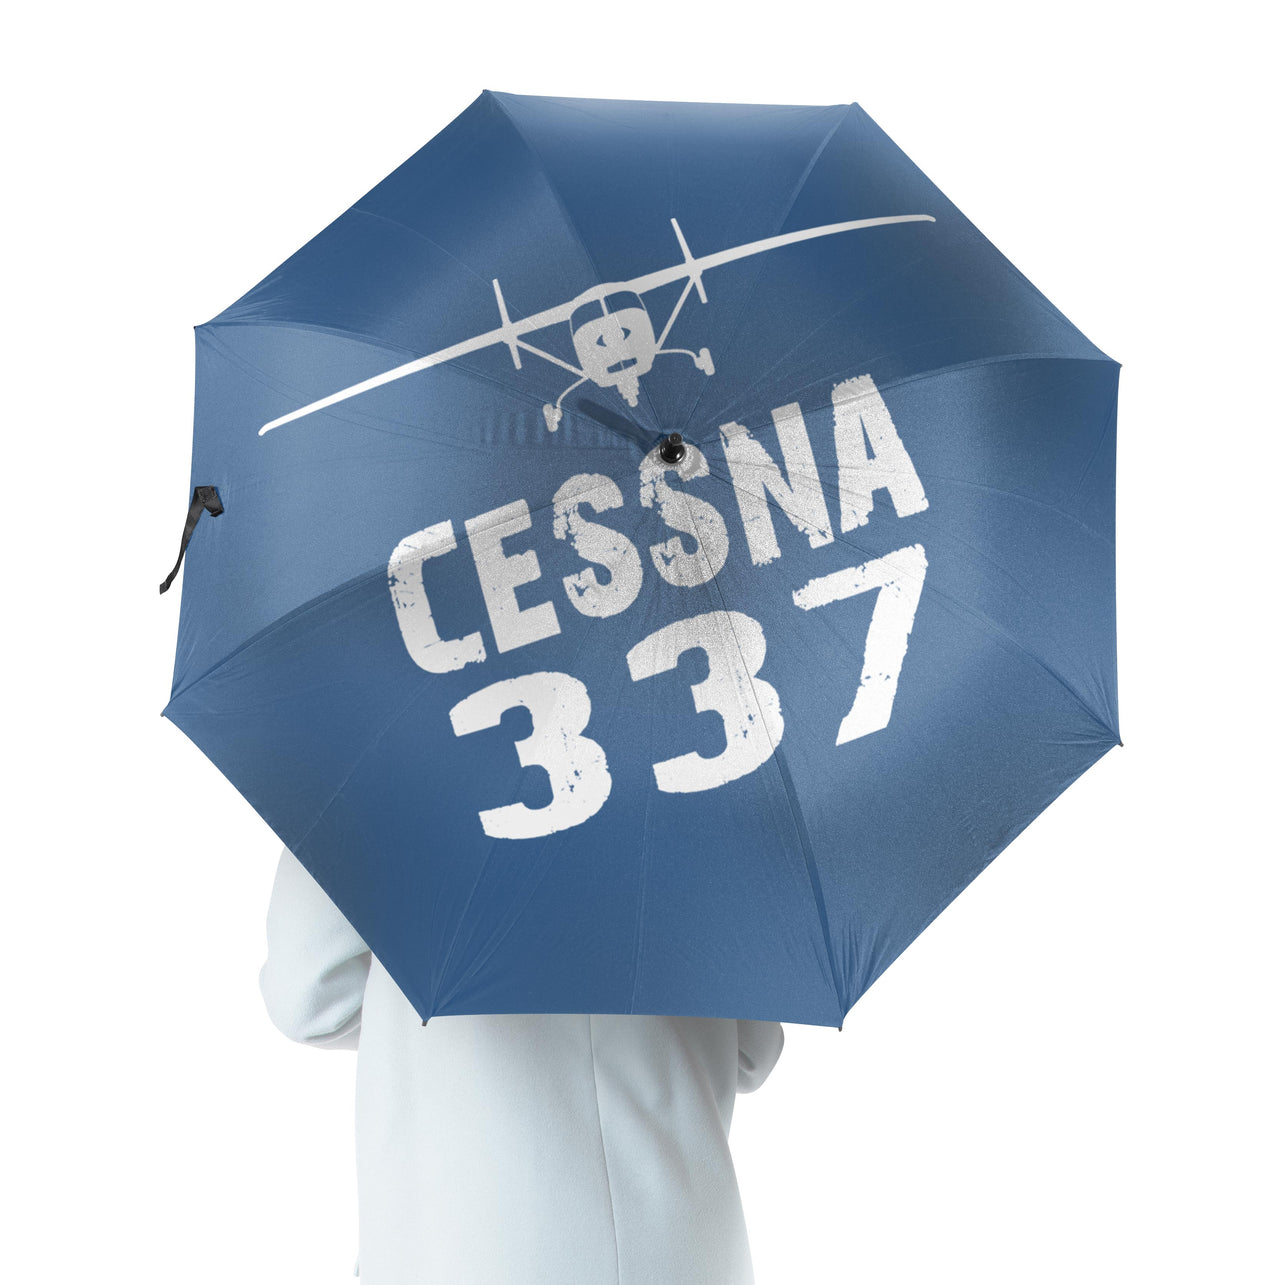 Cessna 337 & Plane Designed Umbrella